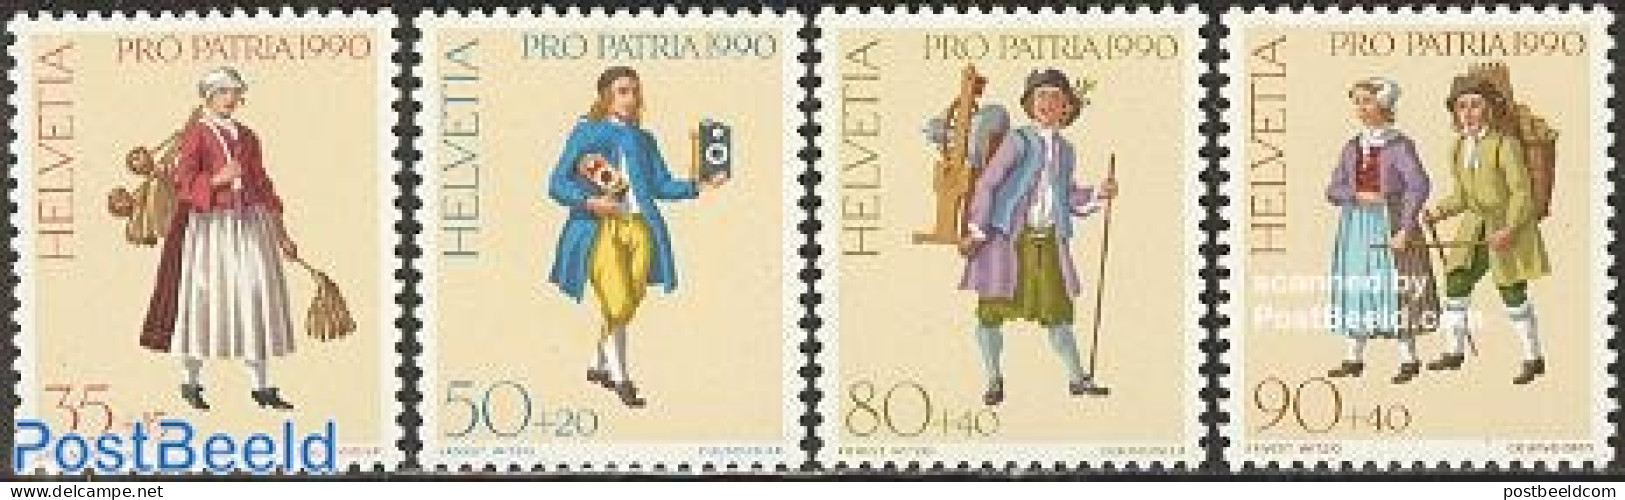 Switzerland 1990 Pro Patria, Costumes 4v, Mint NH, Various - Costumes - Unused Stamps